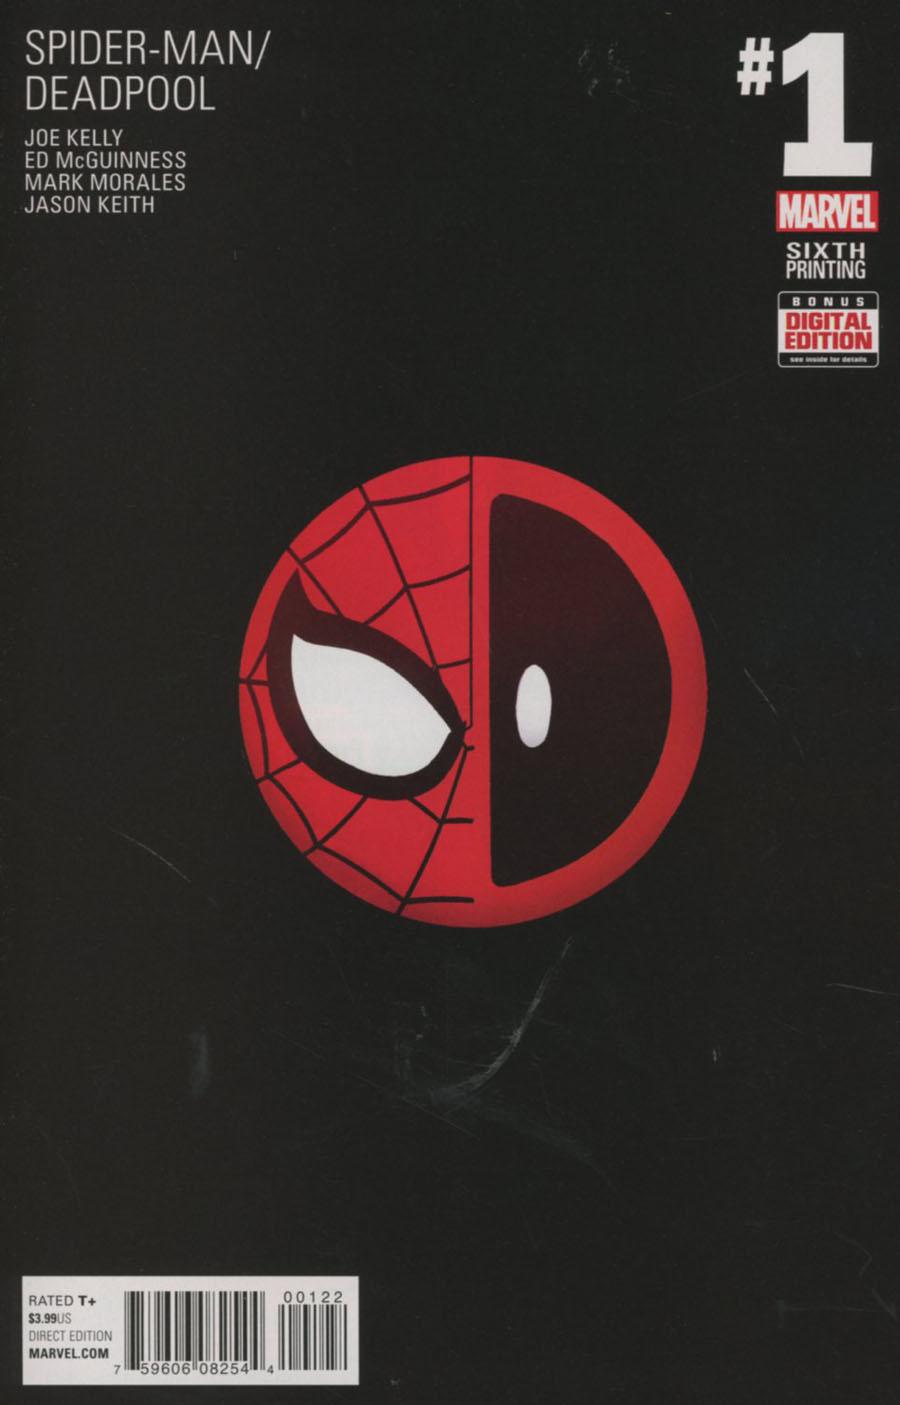 Spider-Man Deadpool Vol. 1 #1